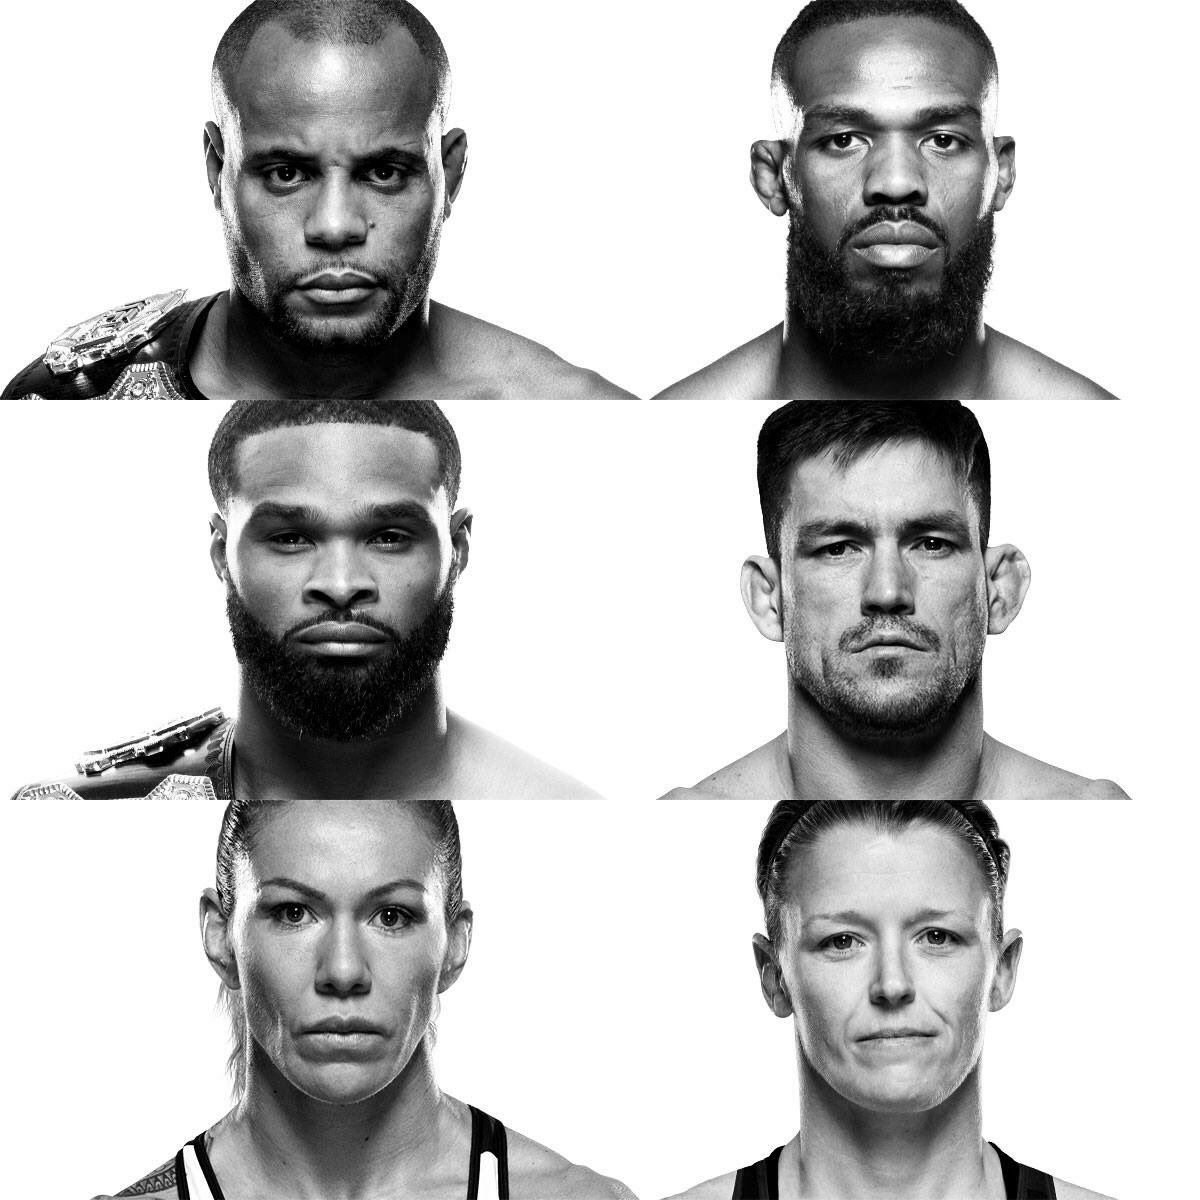 It's fight week! Man I know all my fight fans are super pumped! Cuz I sure am!!! #UFC214 #dcvsjones #mma #war